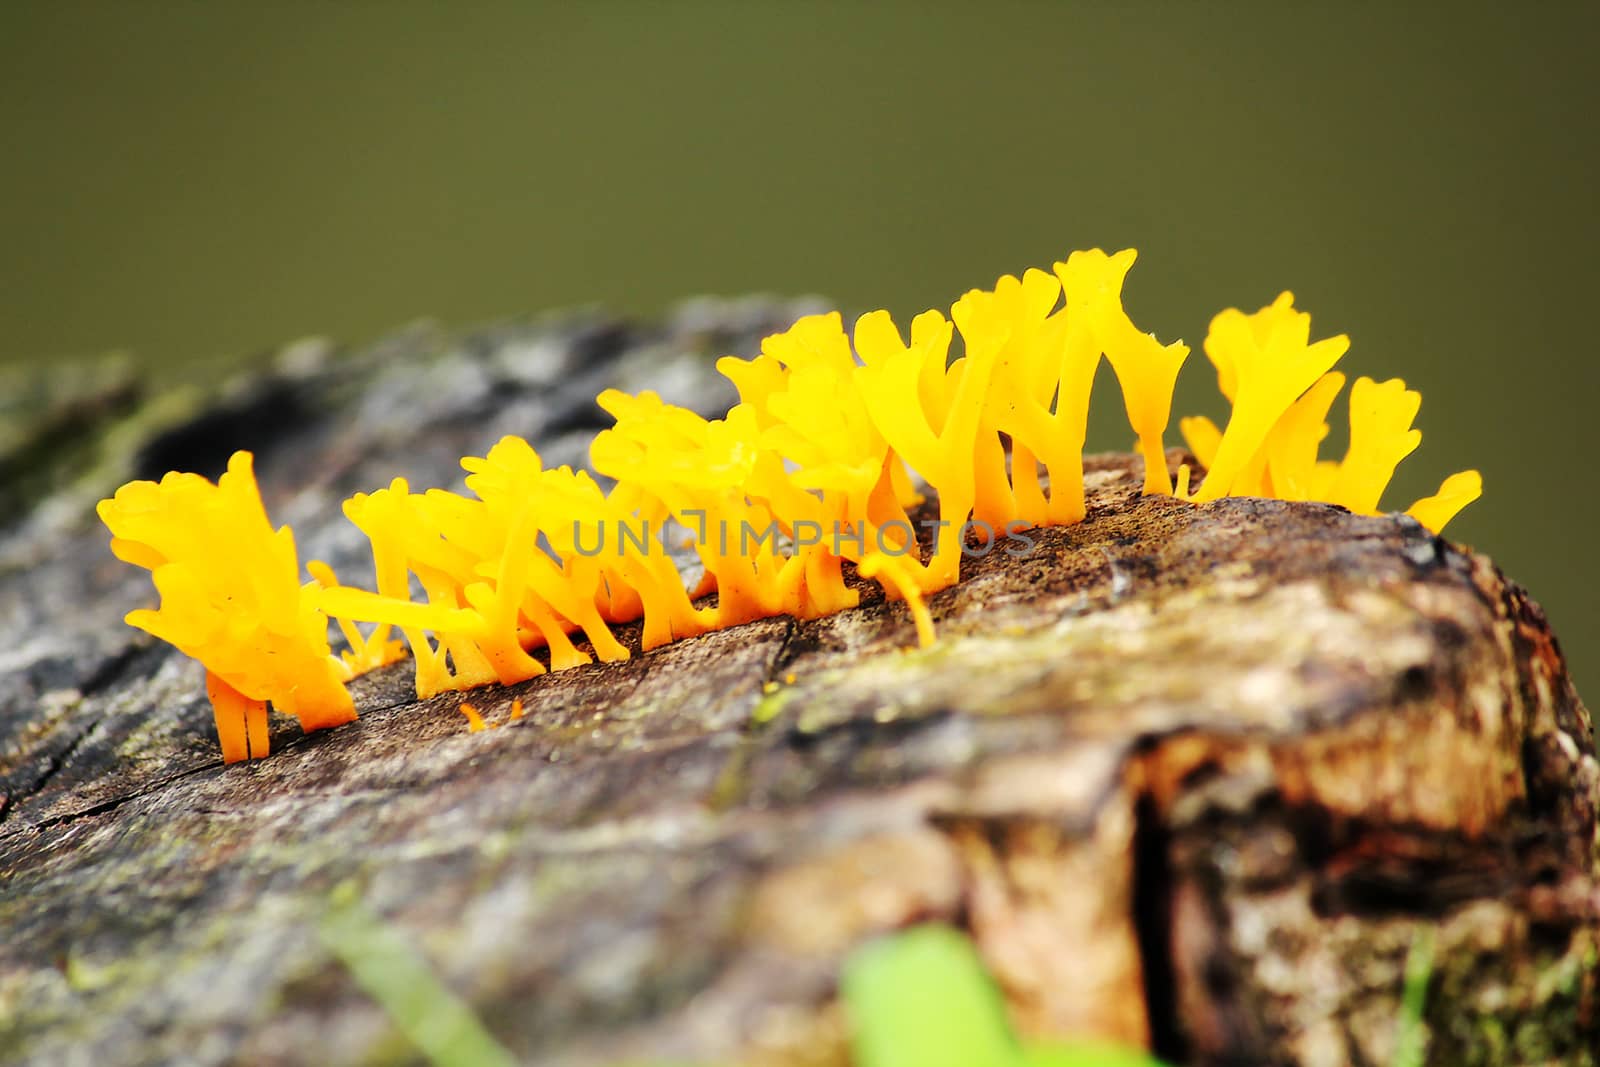 Yellow fungus on the log